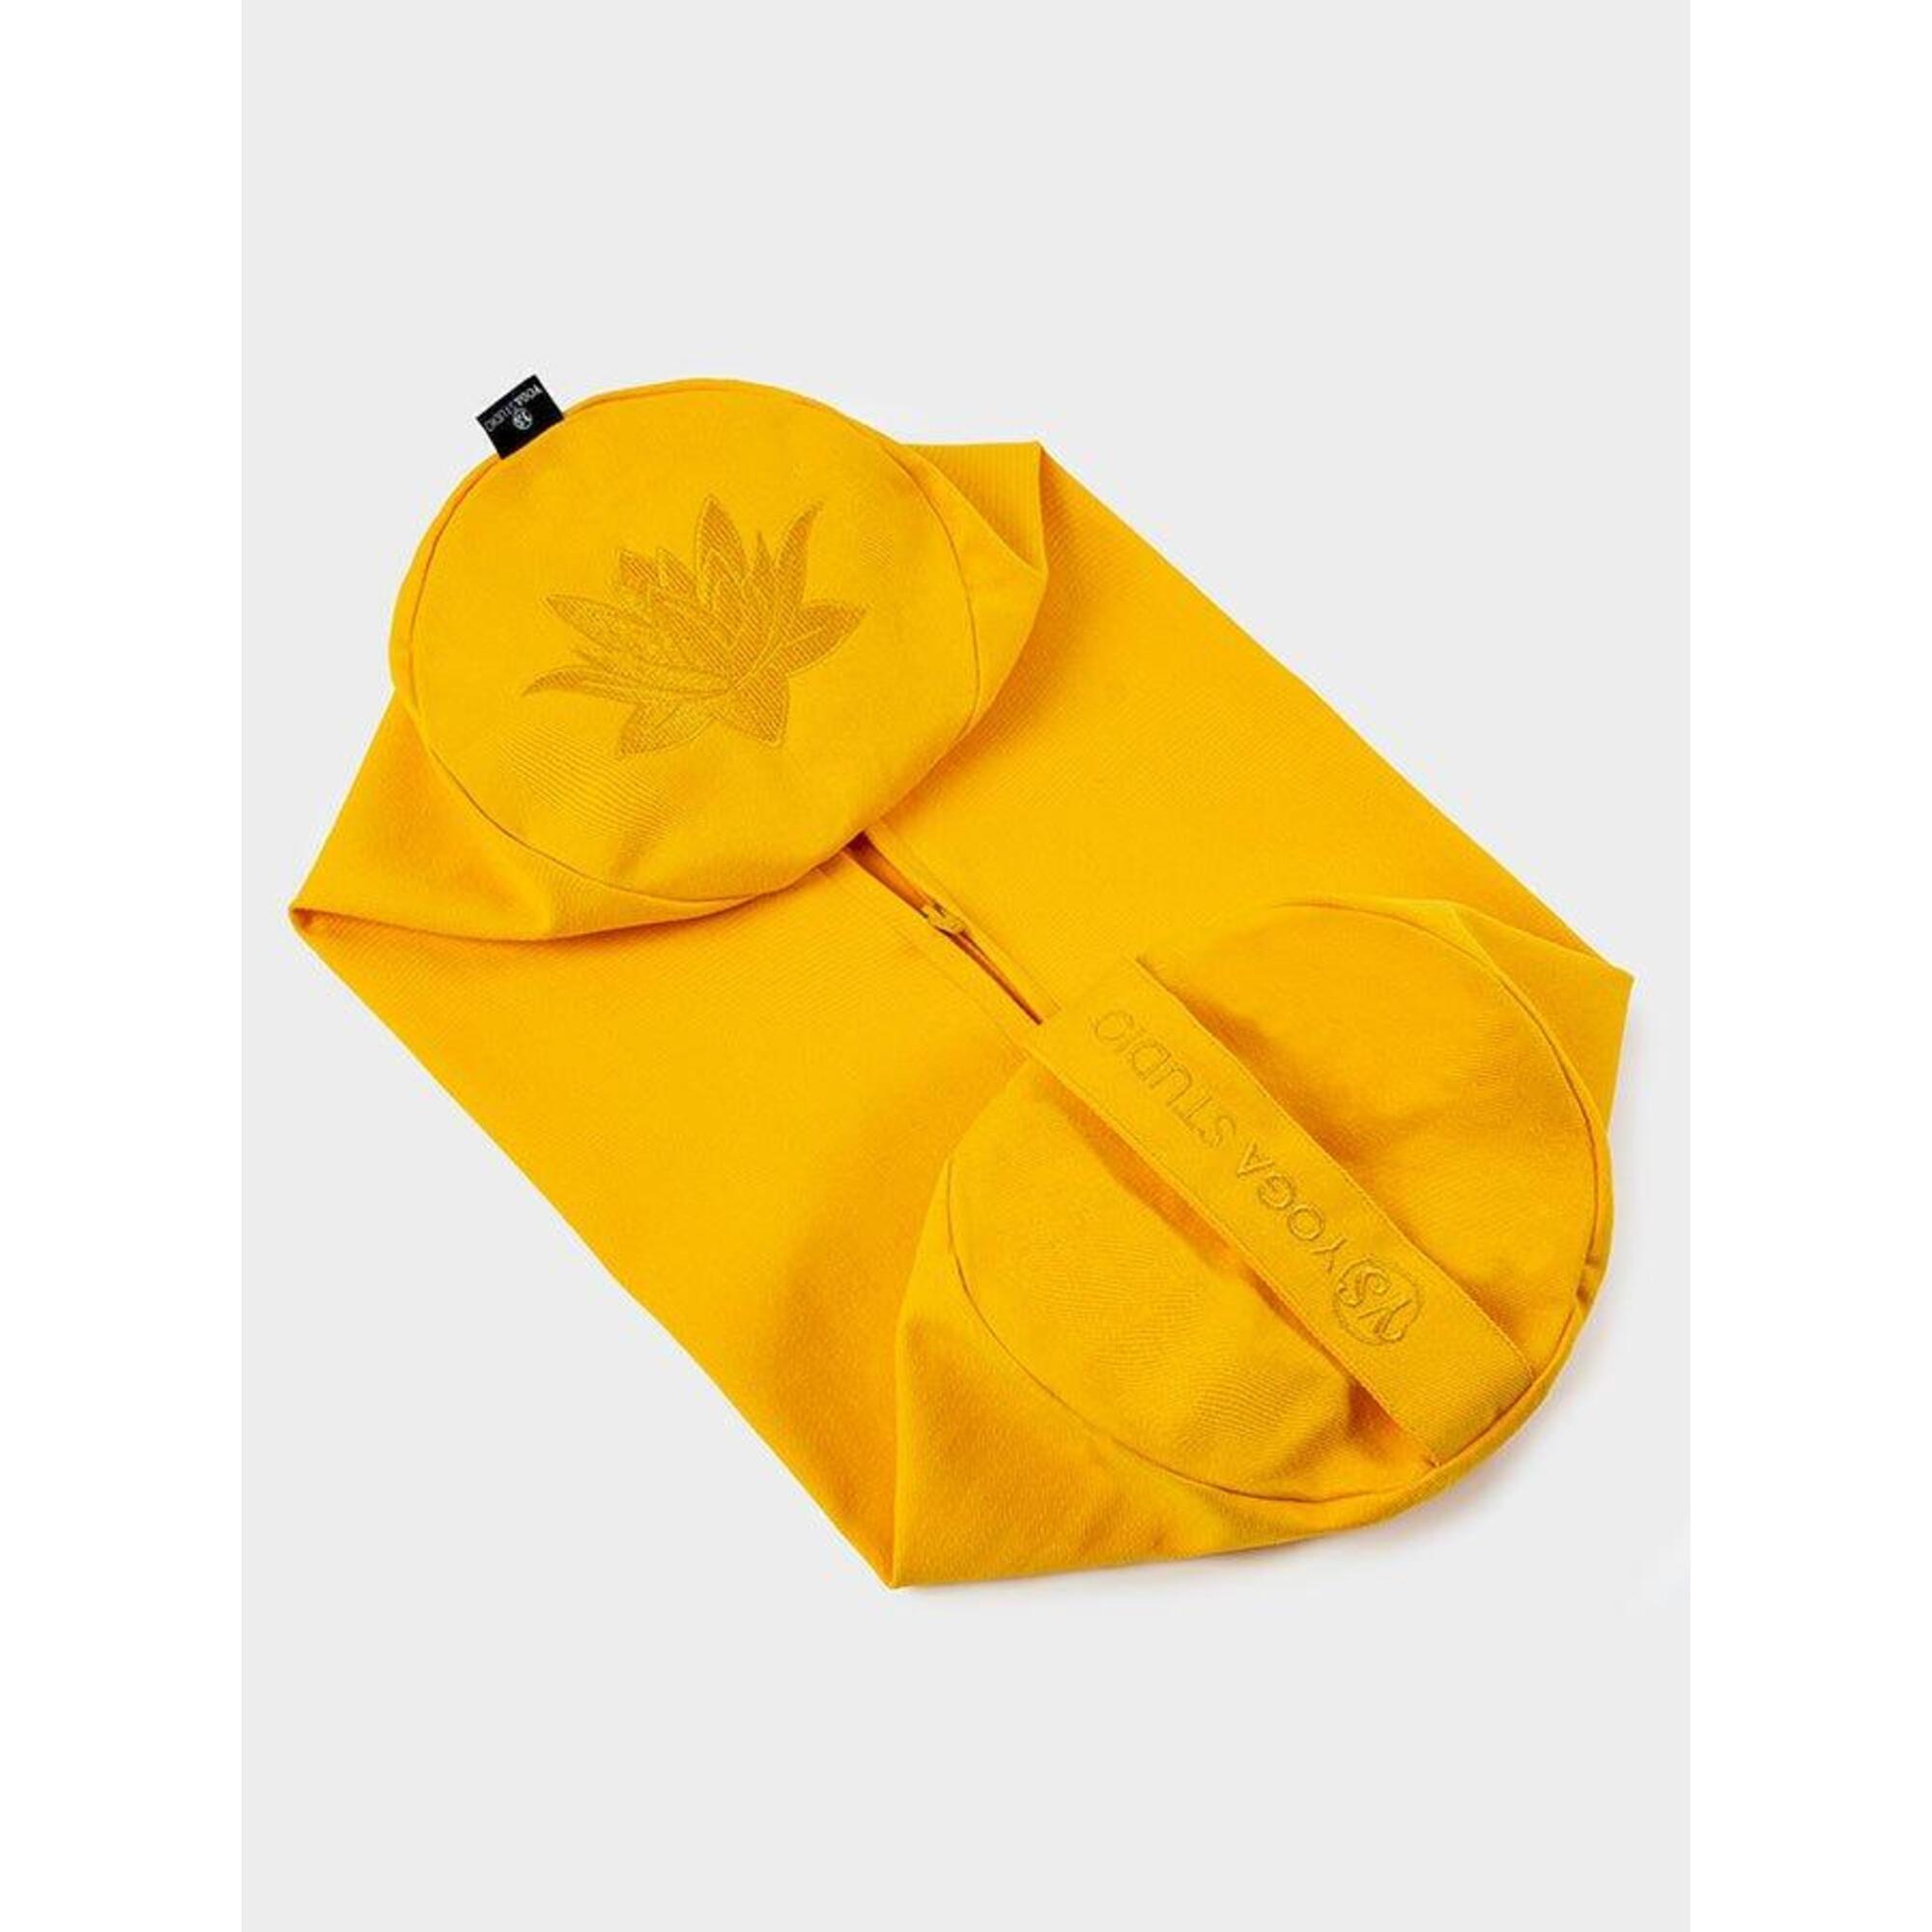 Yoga Studio Spare Bolster Cover - Yellow 1/1